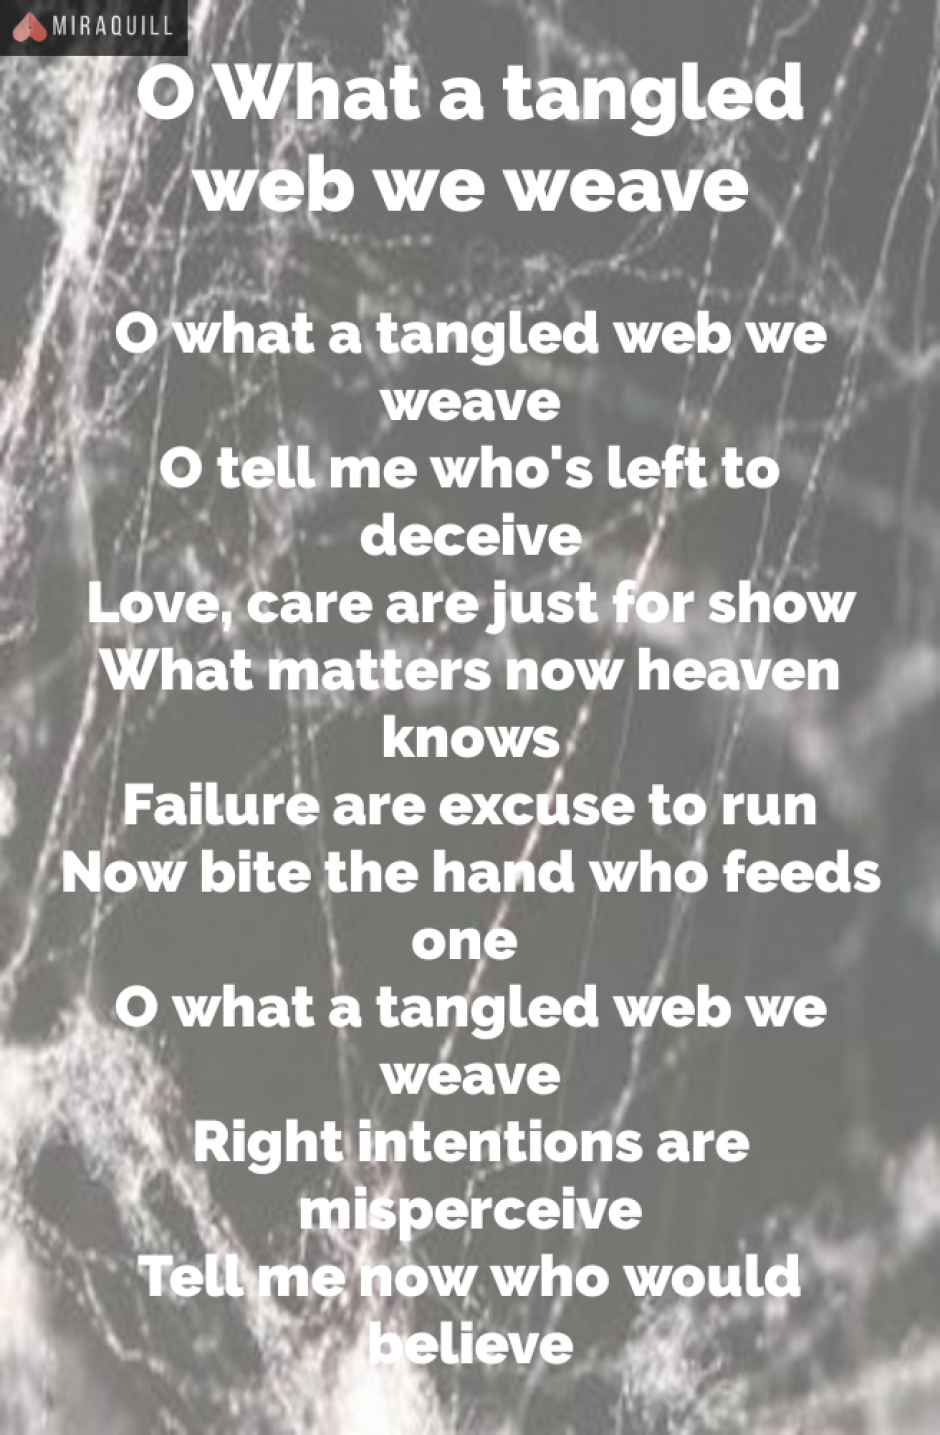 The Webs We Weave